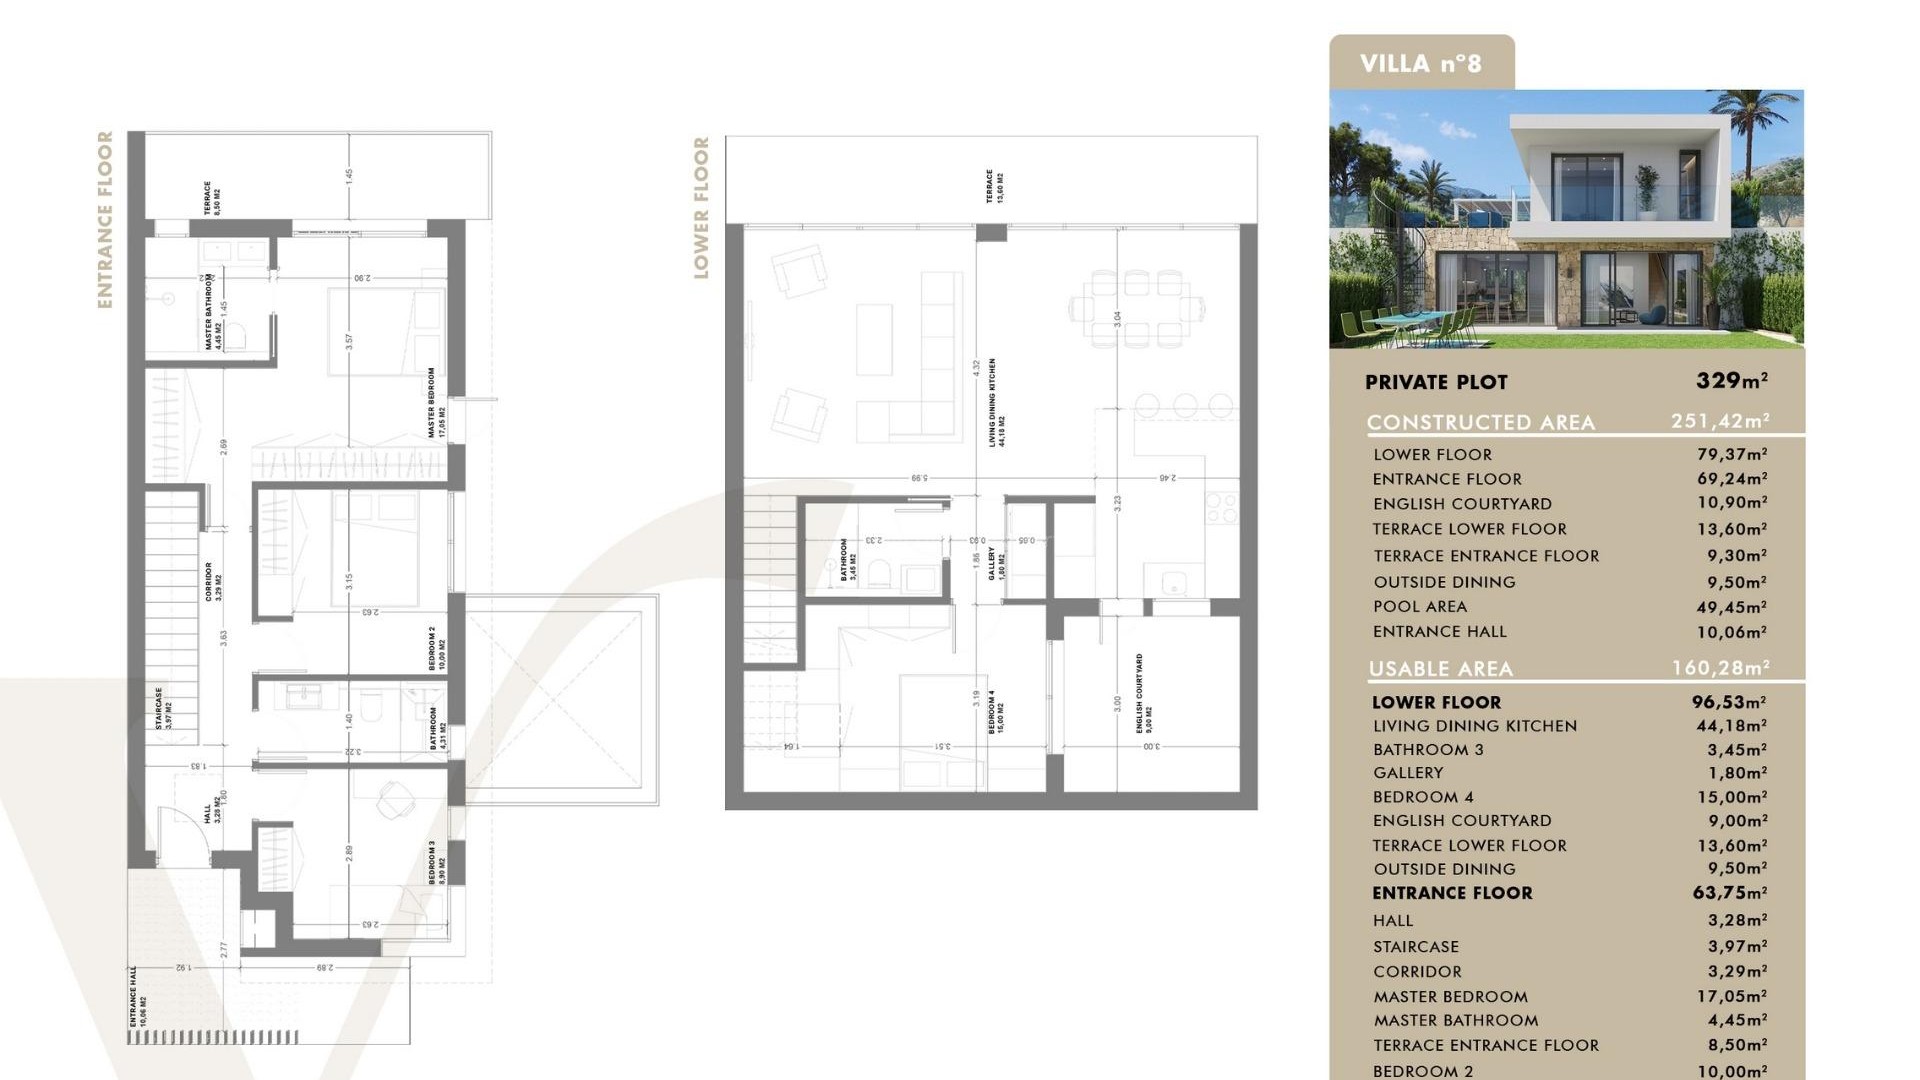 Exclusive house/villa in San Juan de Alicante, 4 bedrooms, 3 bathrooms, private pool, large patio, basement possible, 3 different models